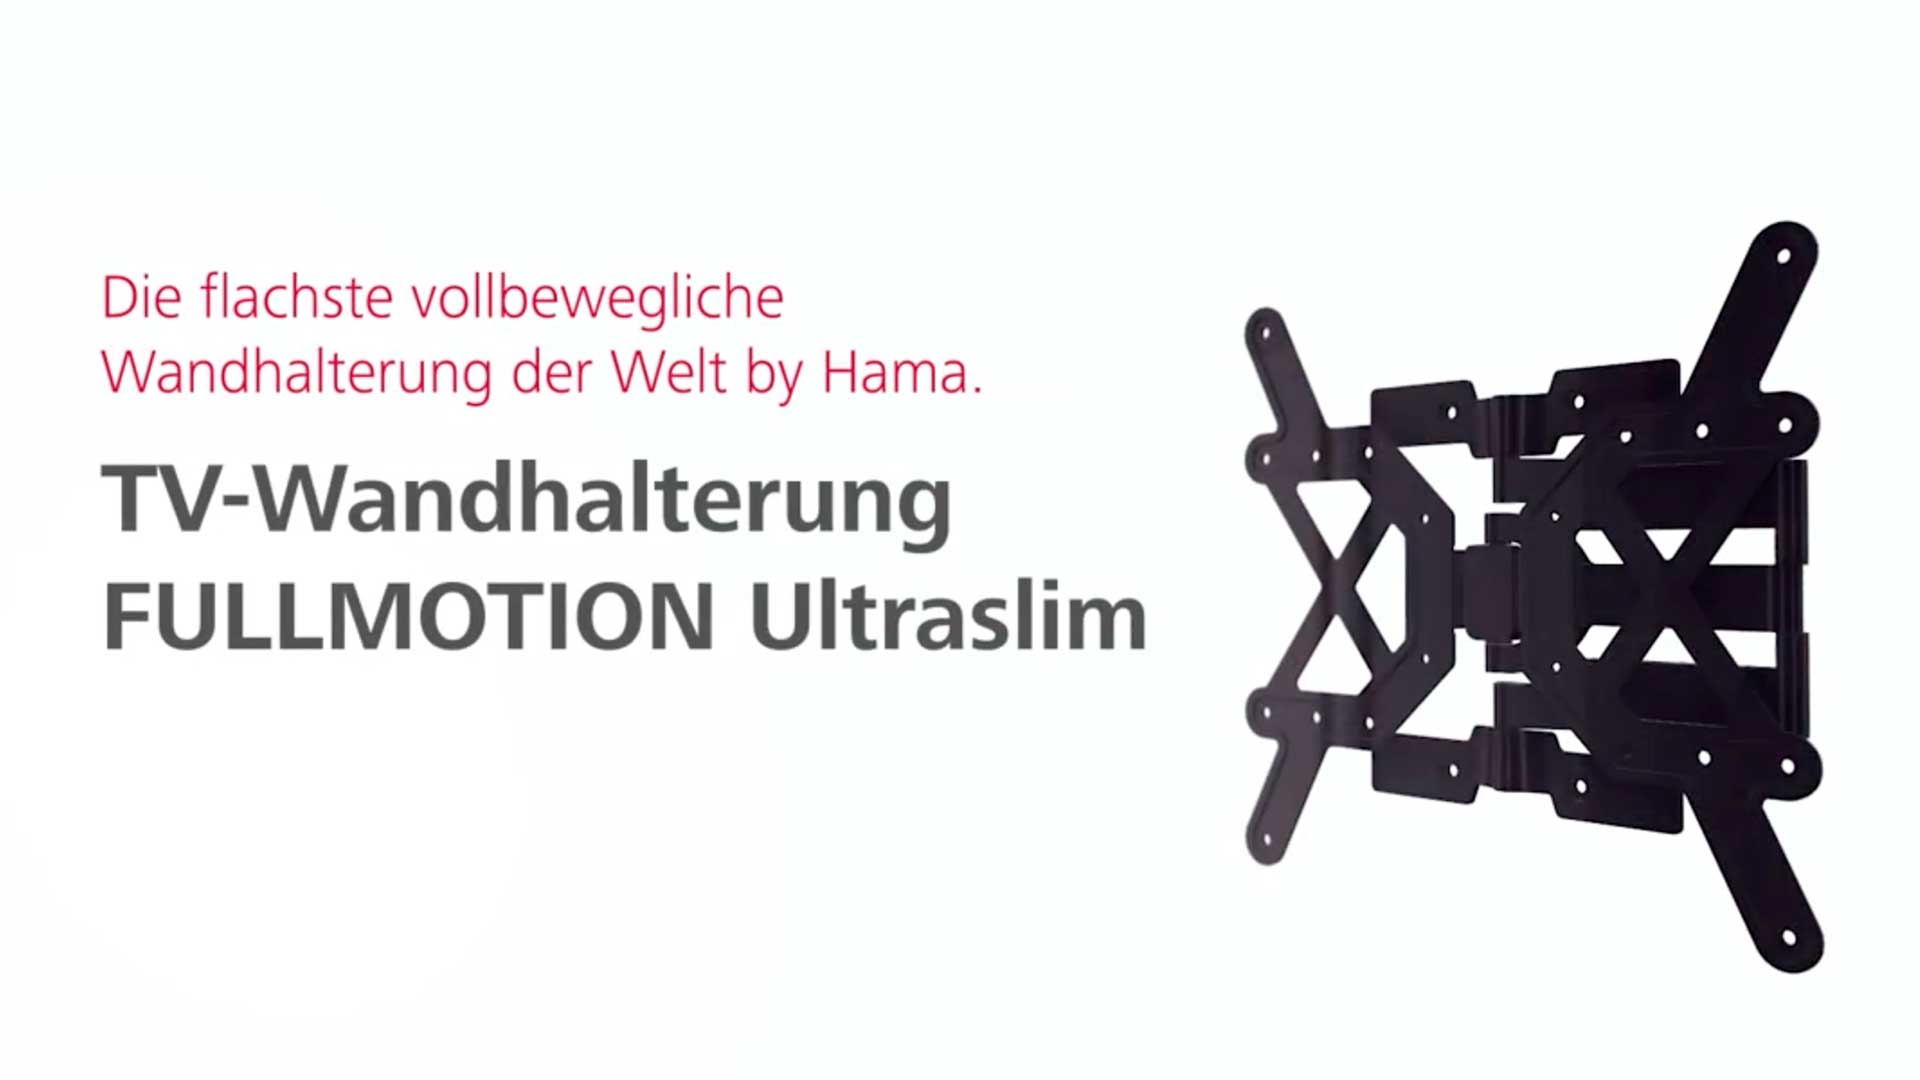 Hama TV-Wandhalterung FULLMOTION "Ultraslim", 400x400, 165 cm (65"), Schwarz